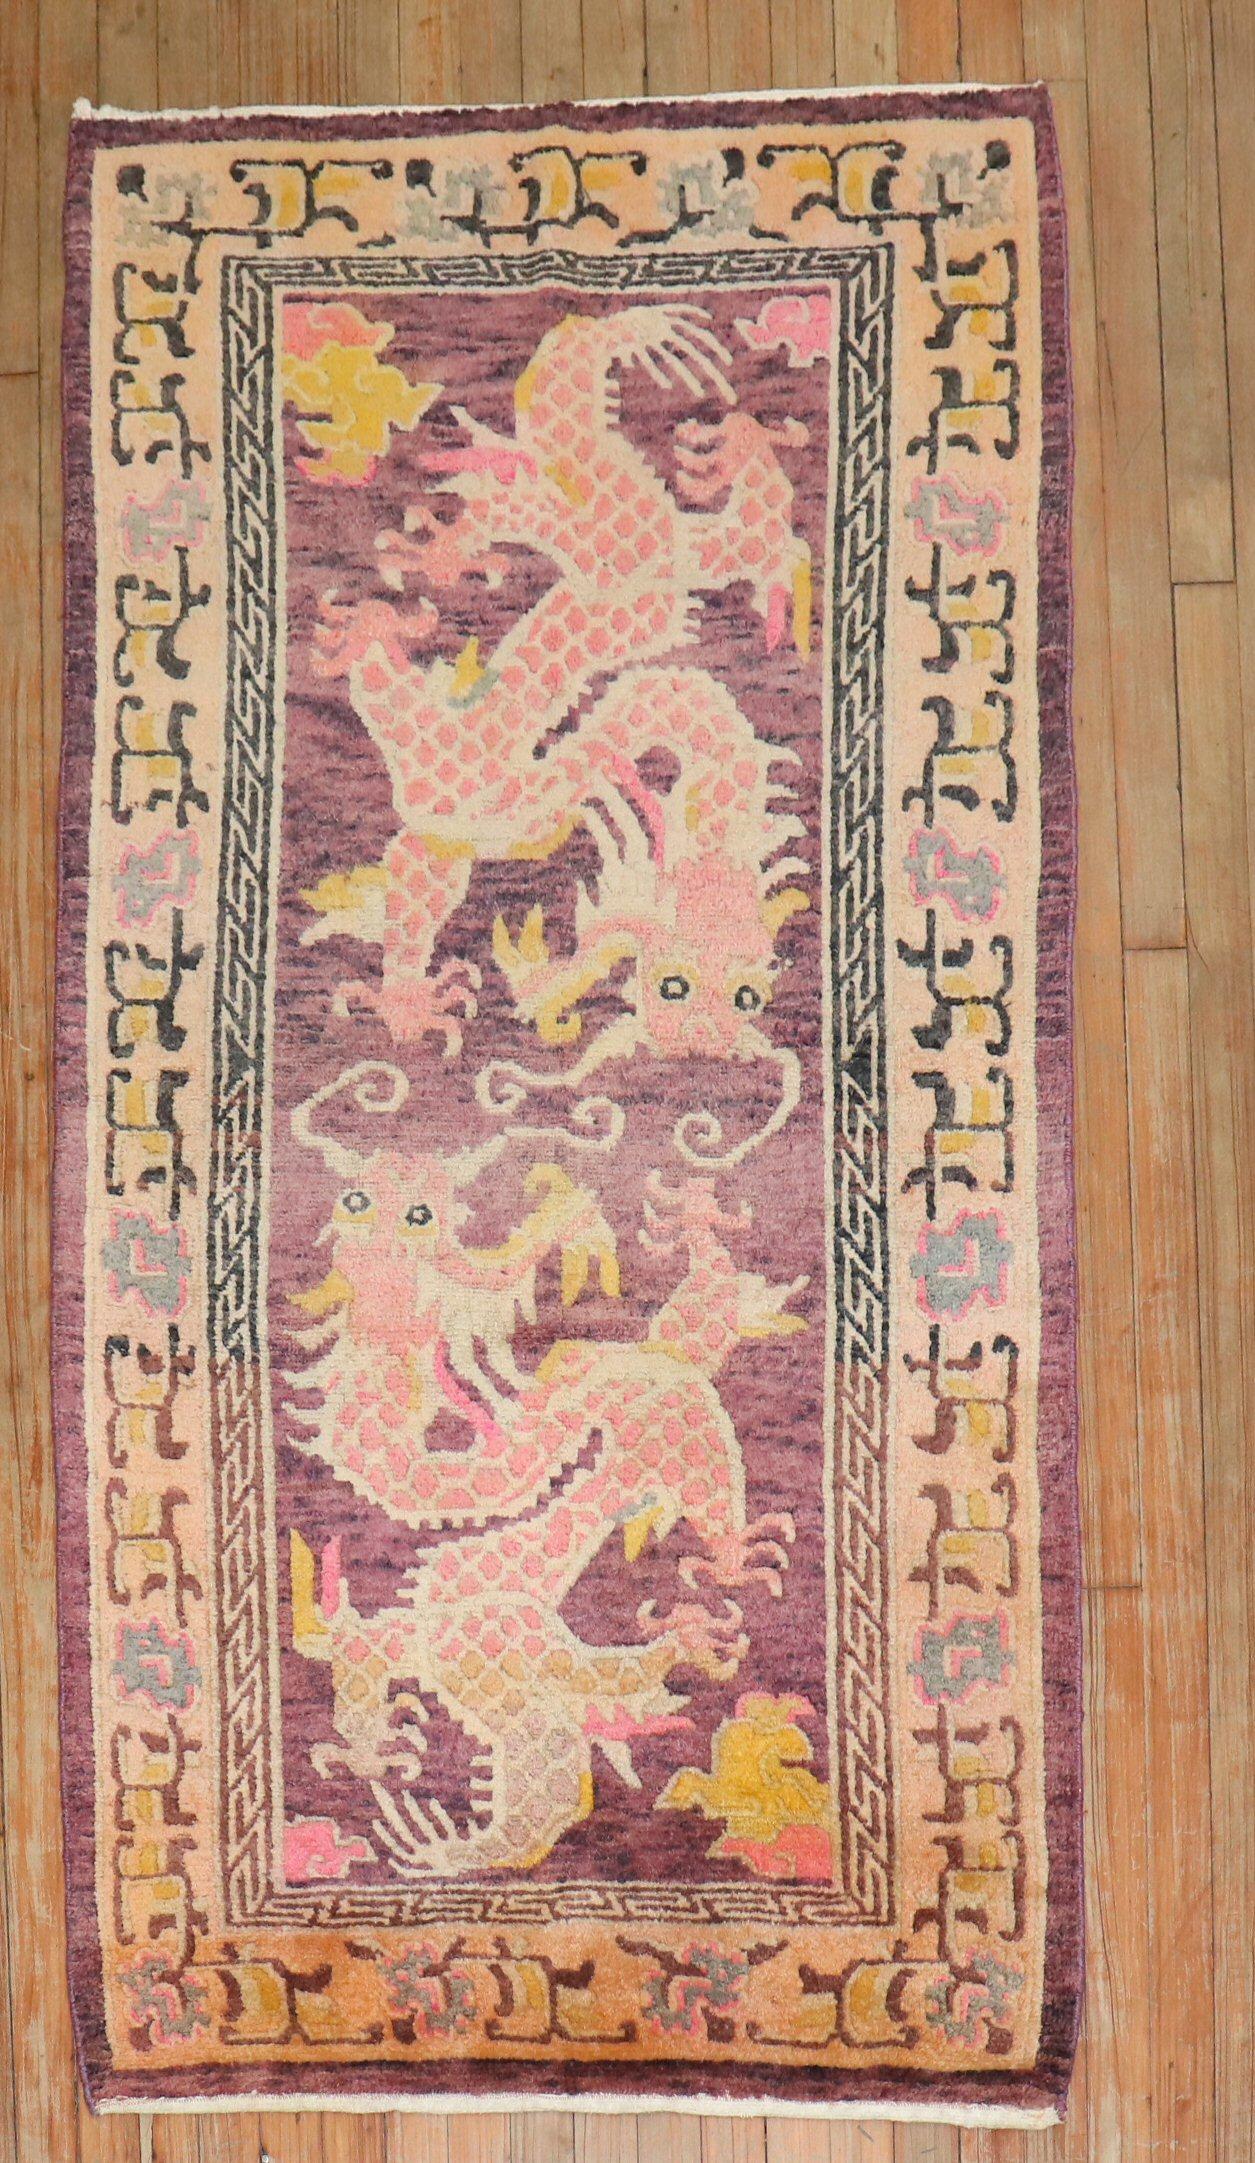 mid 20th Century lavender tone Tibetan Rug

Measures: 3' x 5'9''.